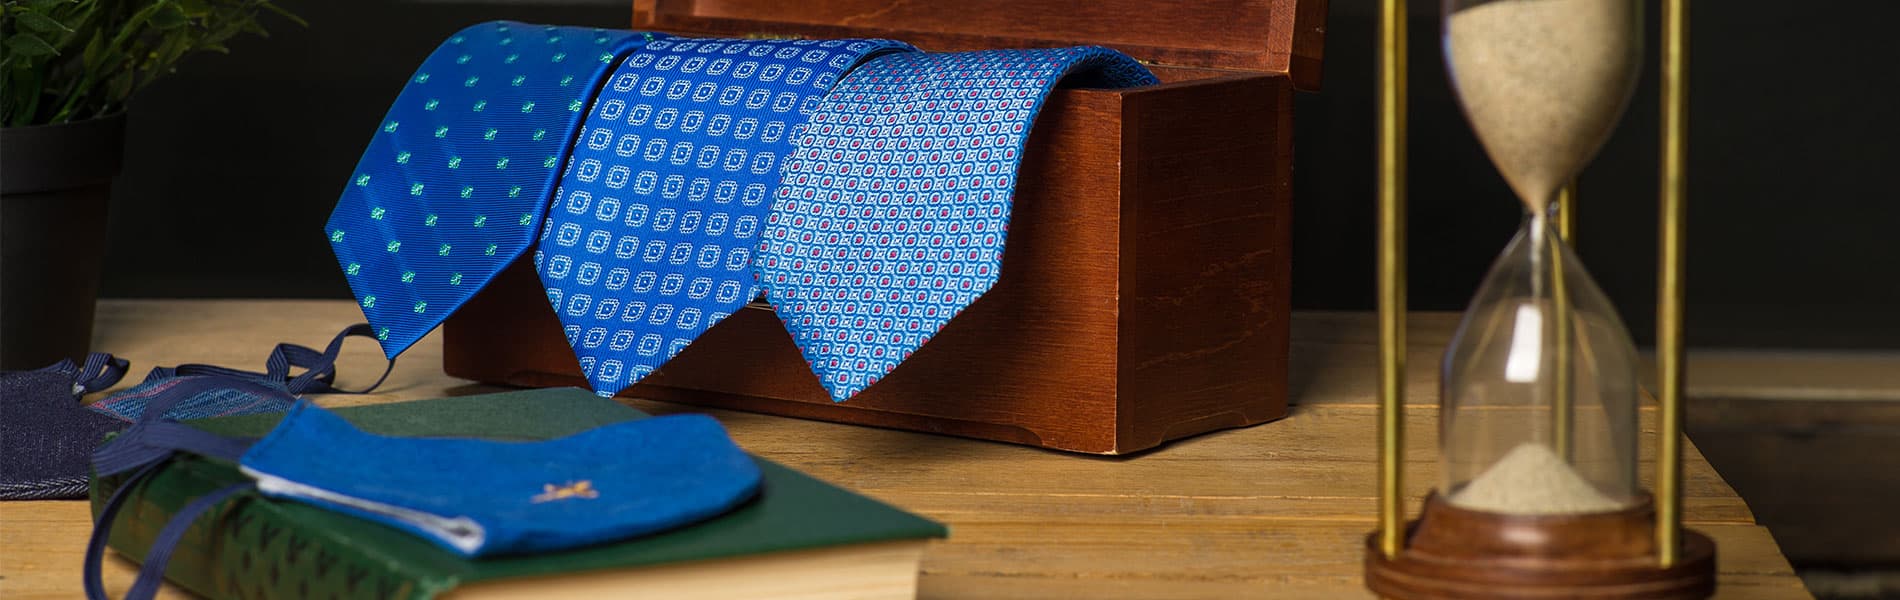 Длина галстука у мужчин – правила этикета